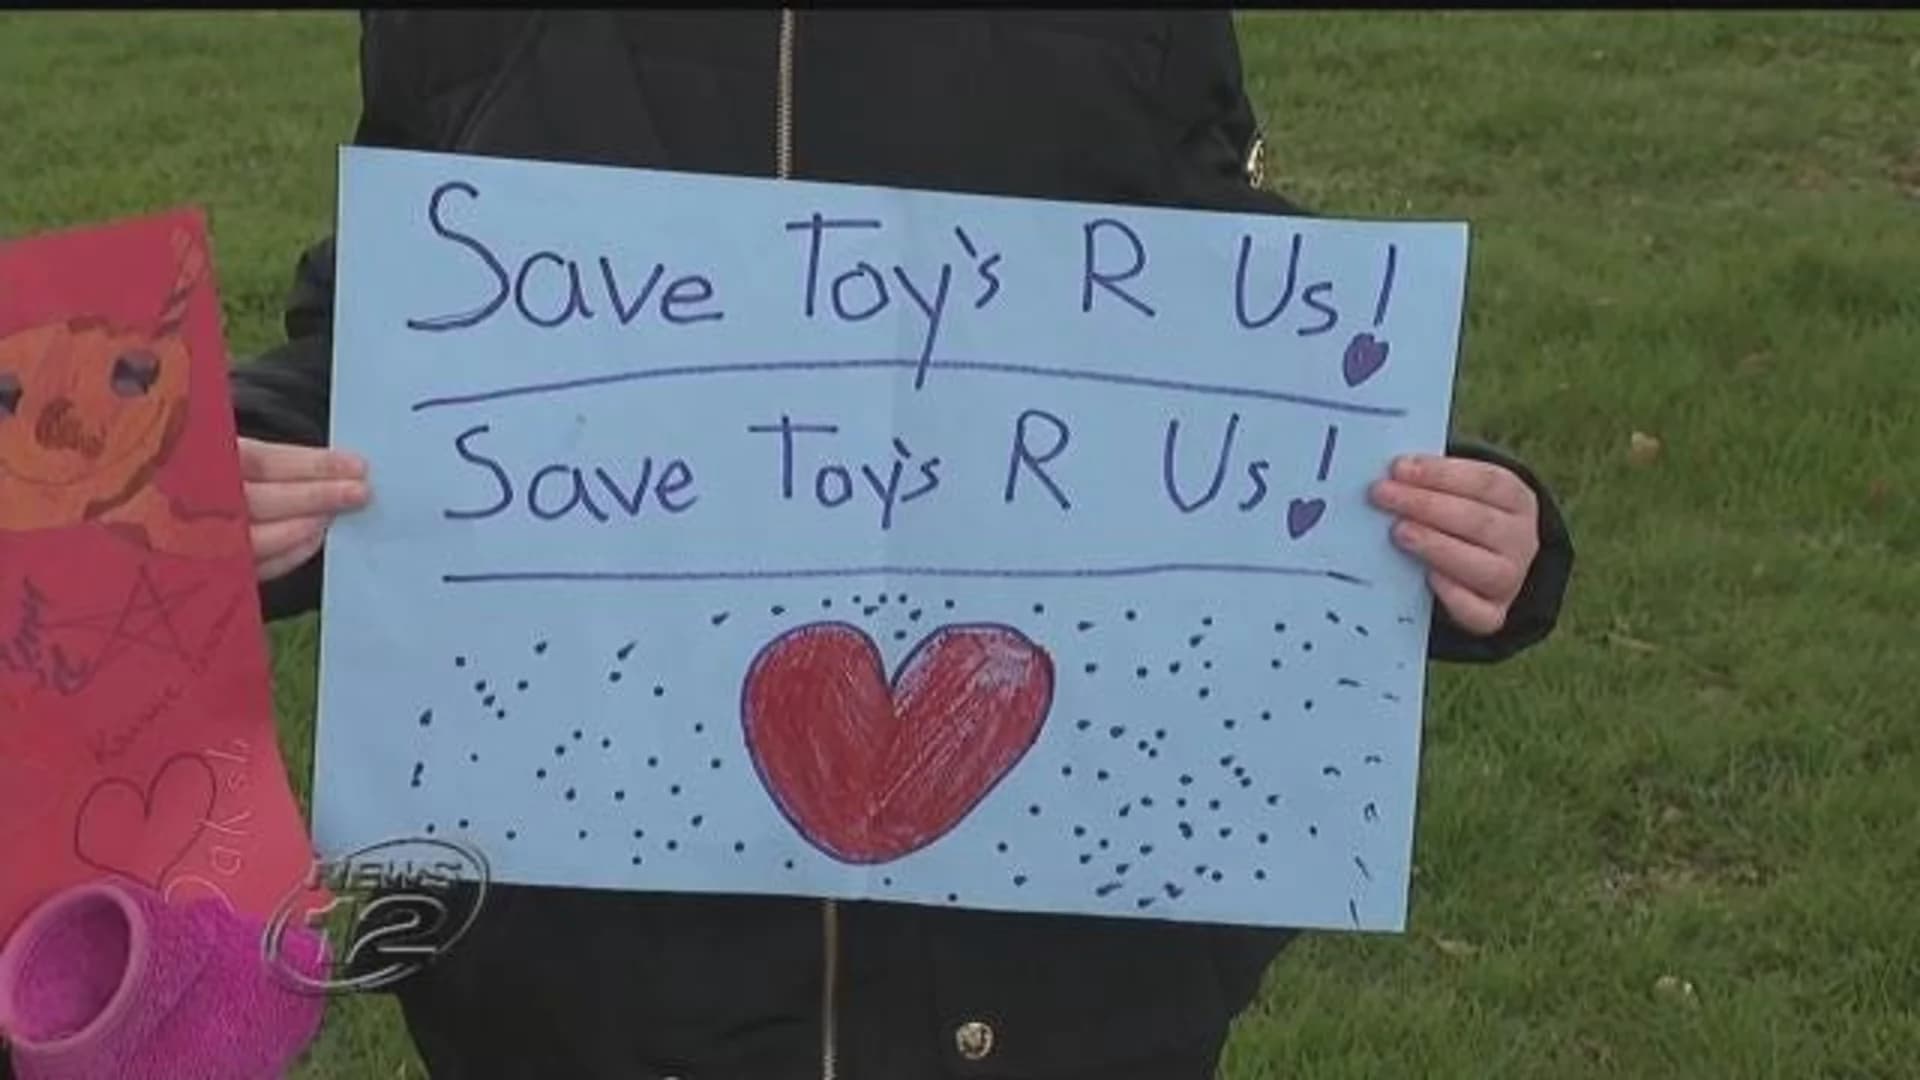 8-year-old Woodbridge girl organizes effort to save Toys R Us